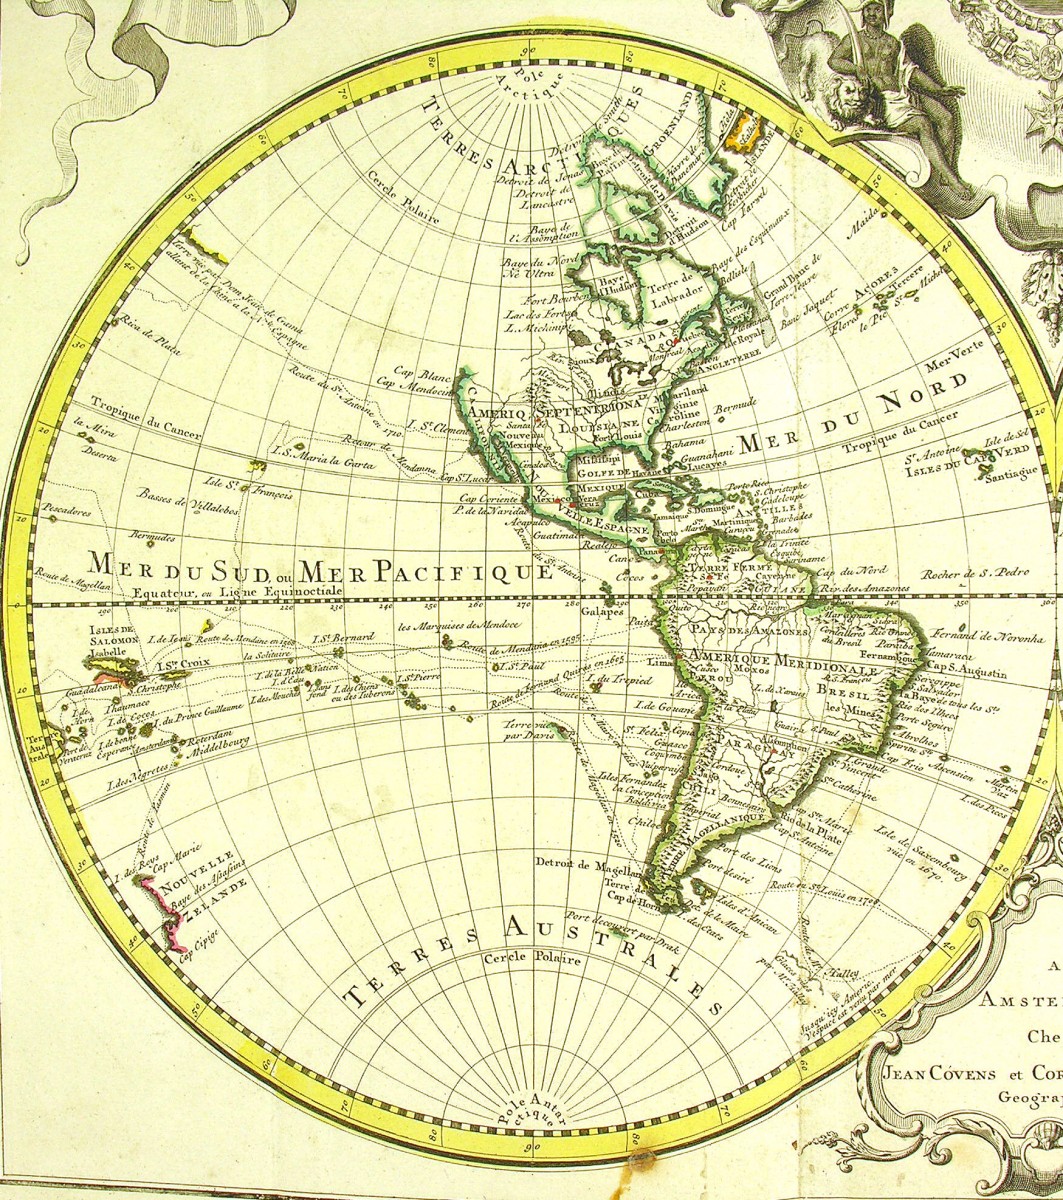 Voyages of Ferdinand Magellan